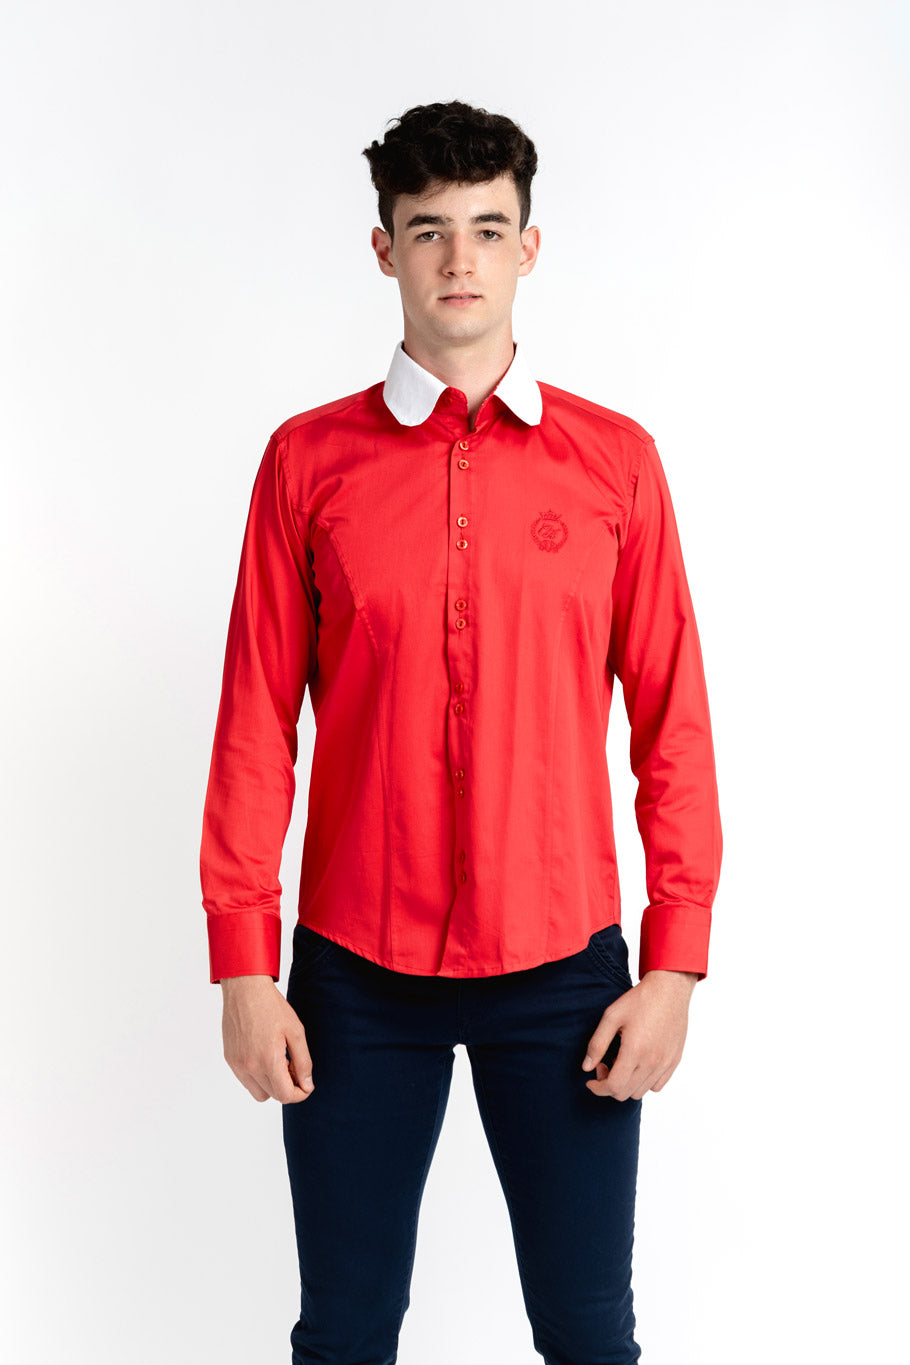 MELLOW RED - Camasa casual, pentru barbati